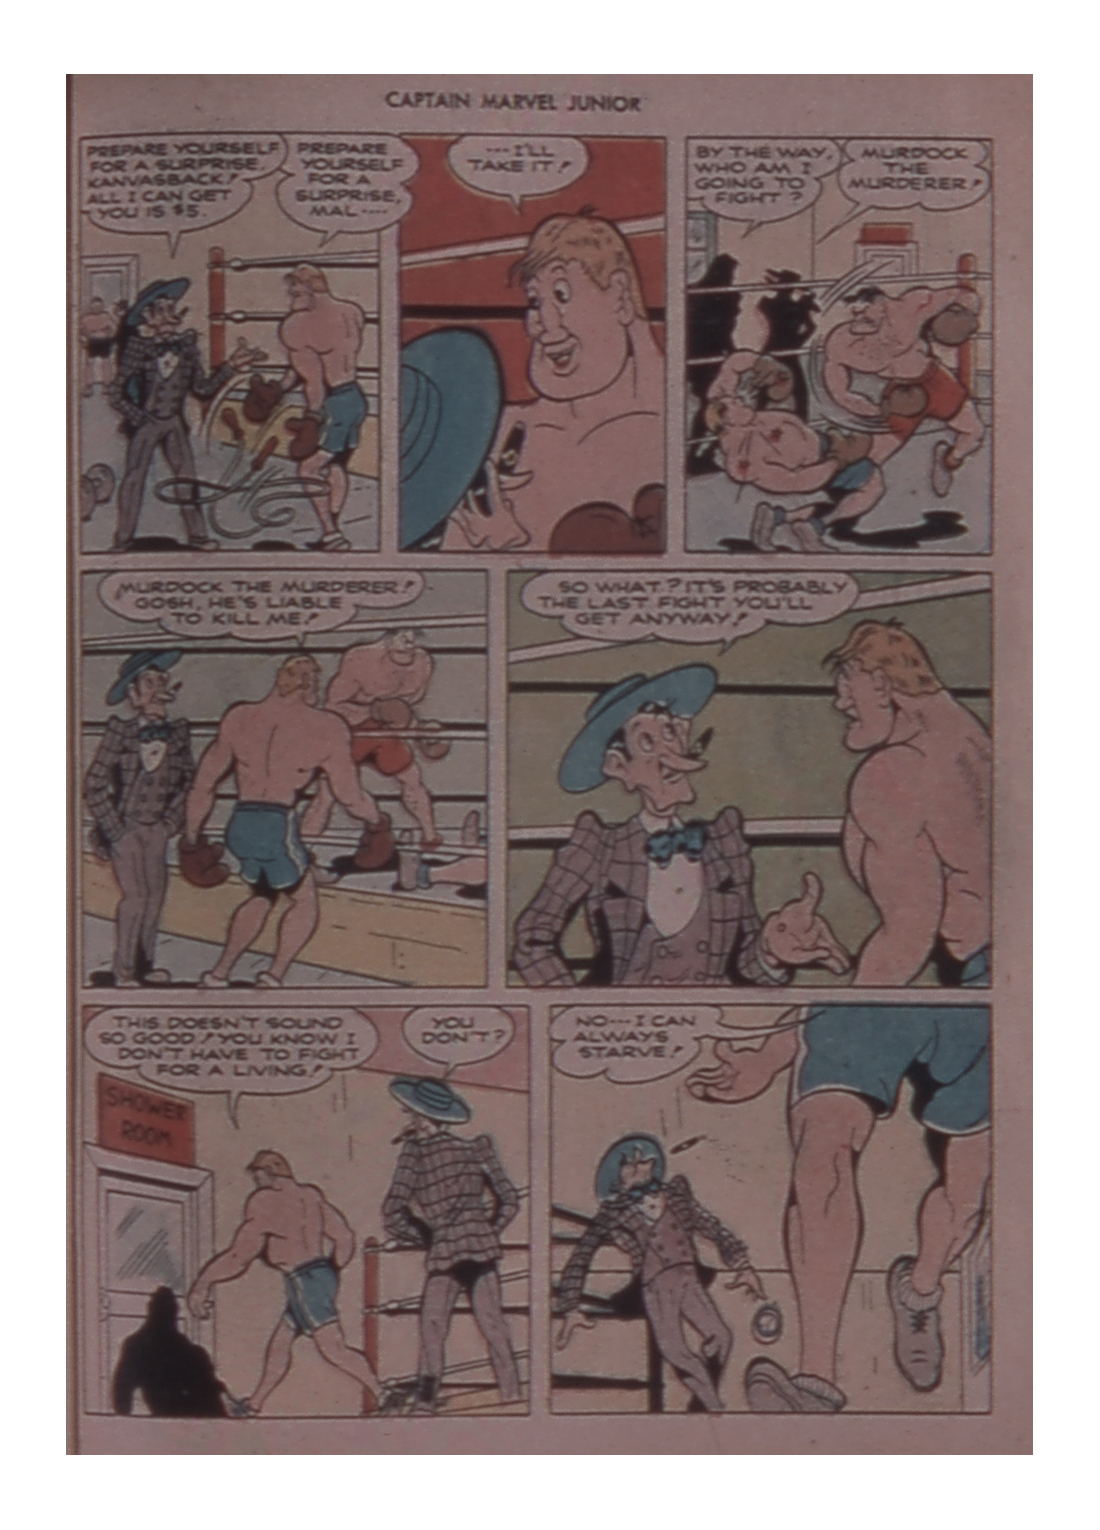 Read online Captain Marvel, Jr. comic -  Issue #57 - 39